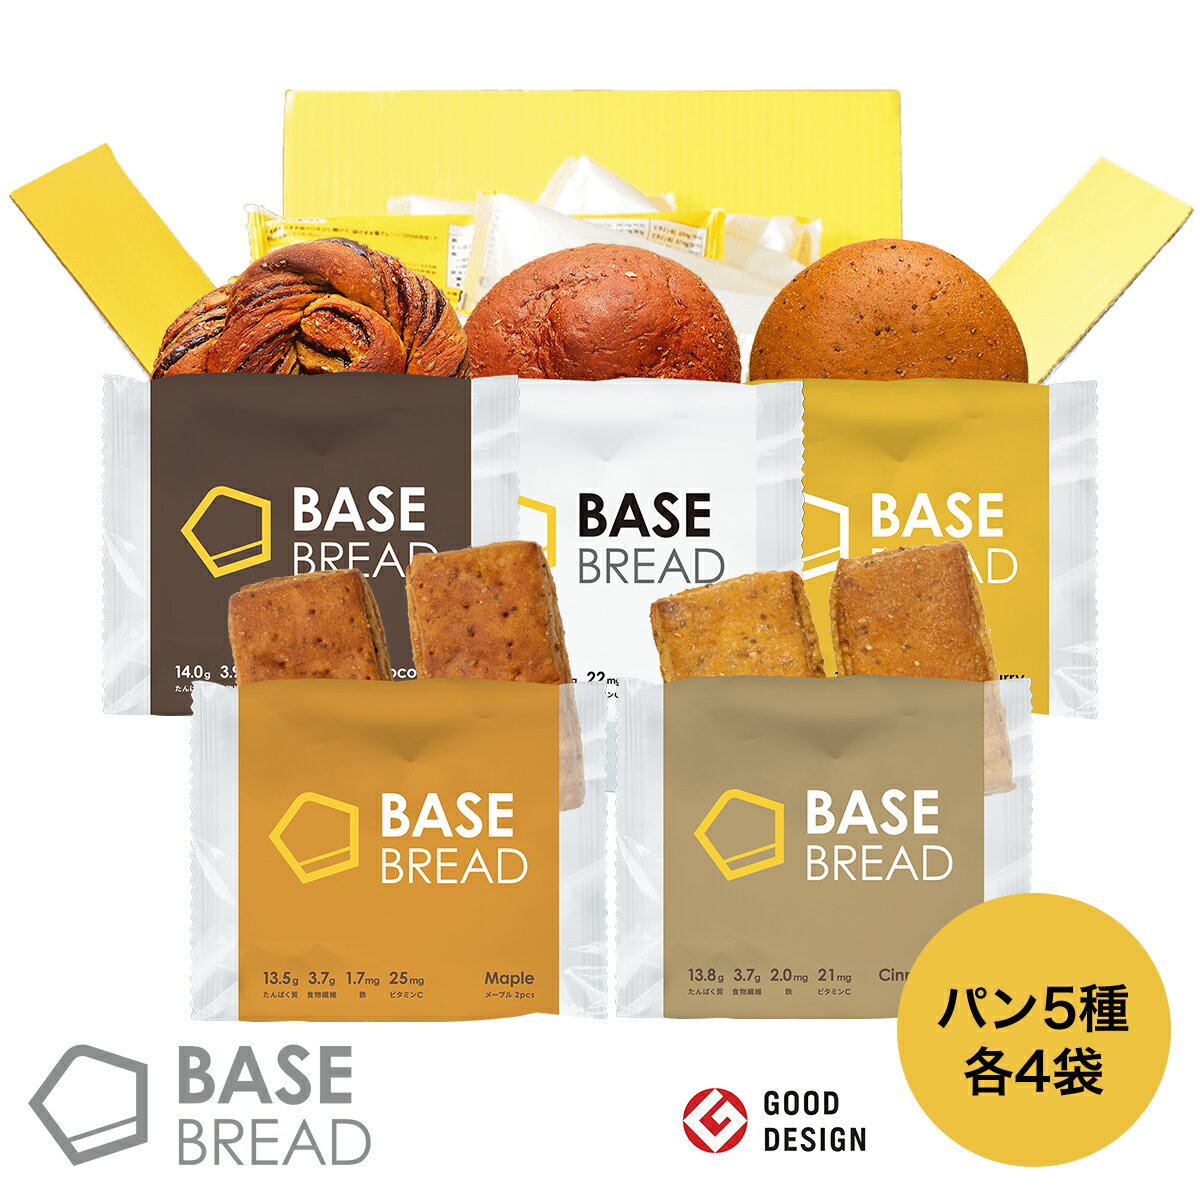 BASE BREAD プレーン チョコレート メープル シナモン カレー 各 パン 4袋 セット 完全栄養食 | basefood お試し 栄…